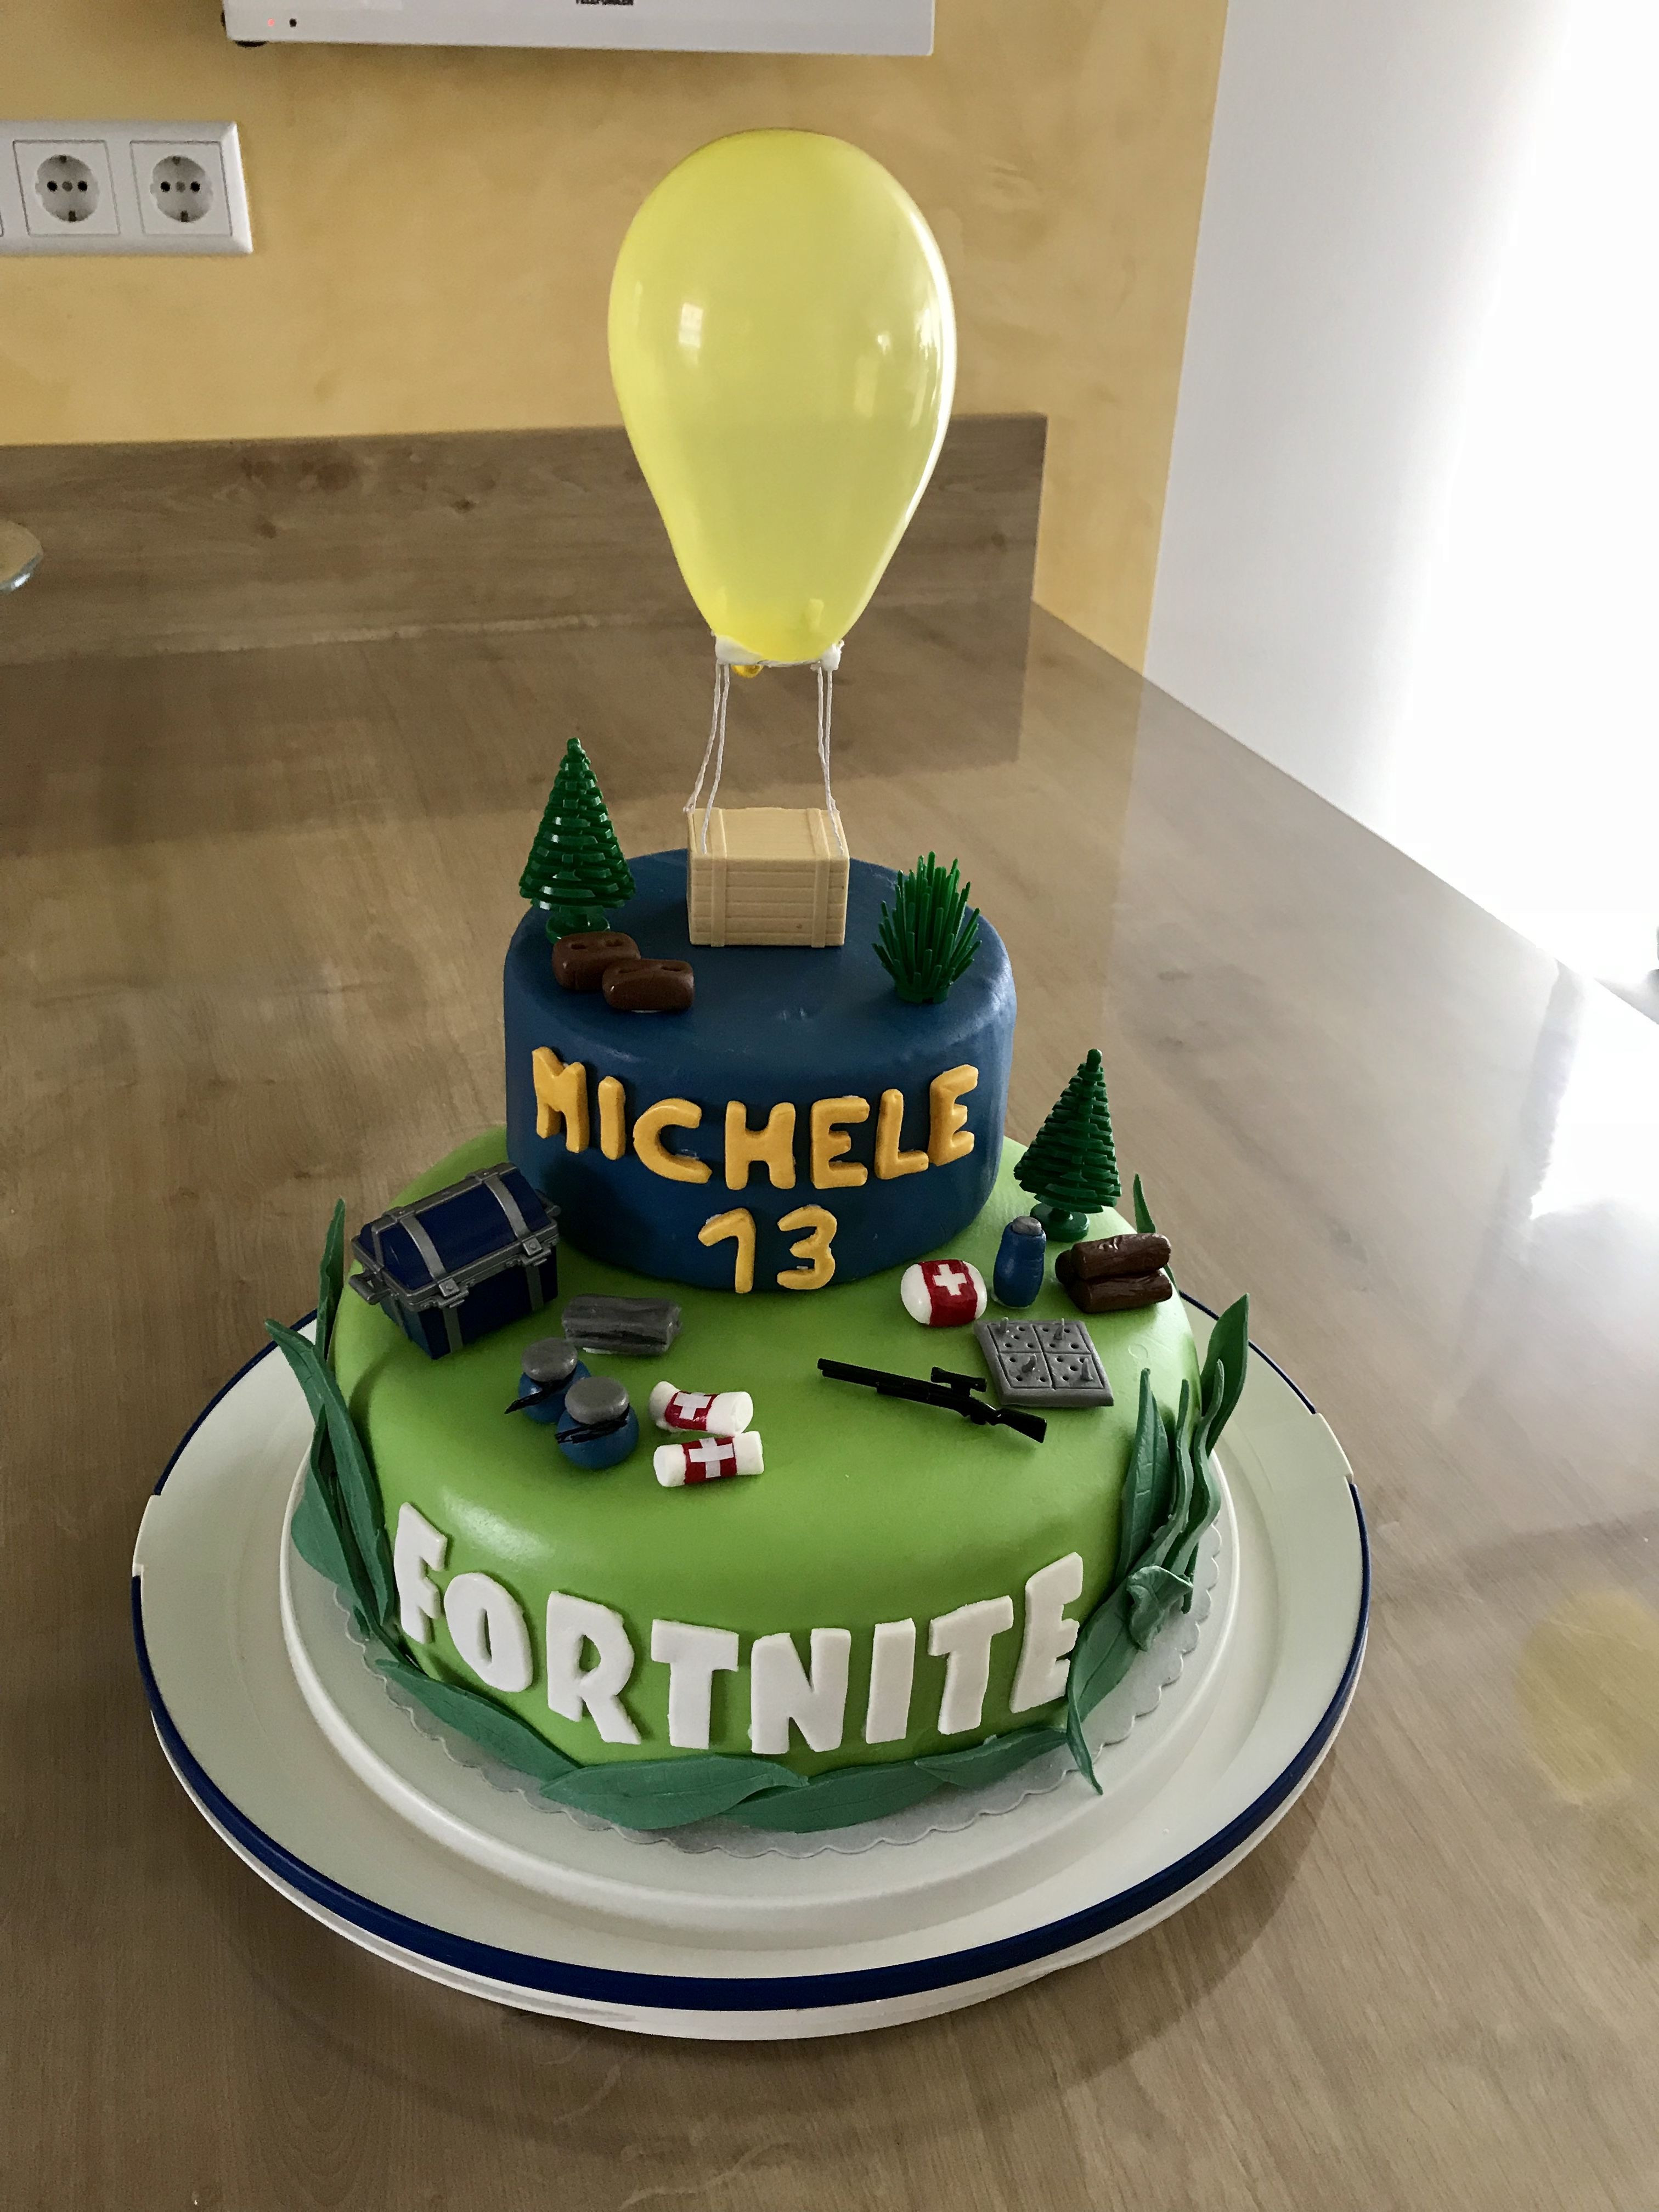 Fortnite Geburtstagstorte
 Fortnite Cake Torte Fondant